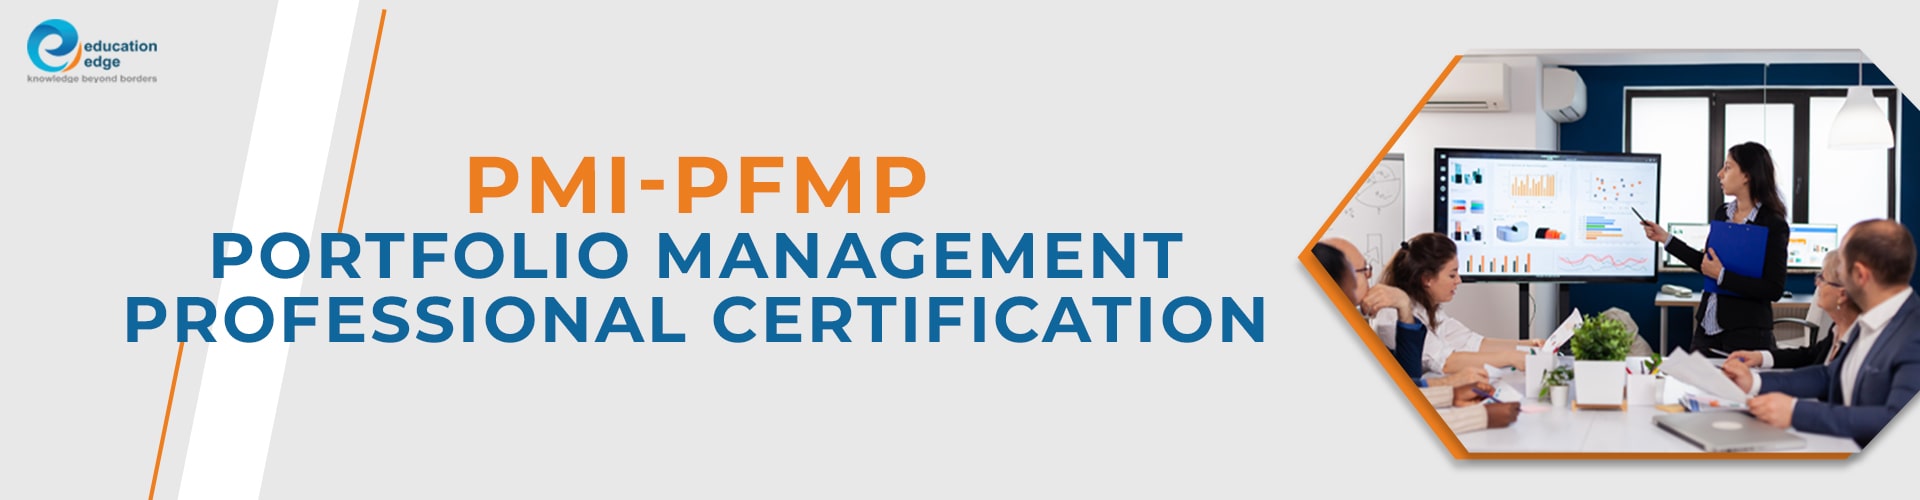 PMI-PfMP- Portfolio Management Professional Certification